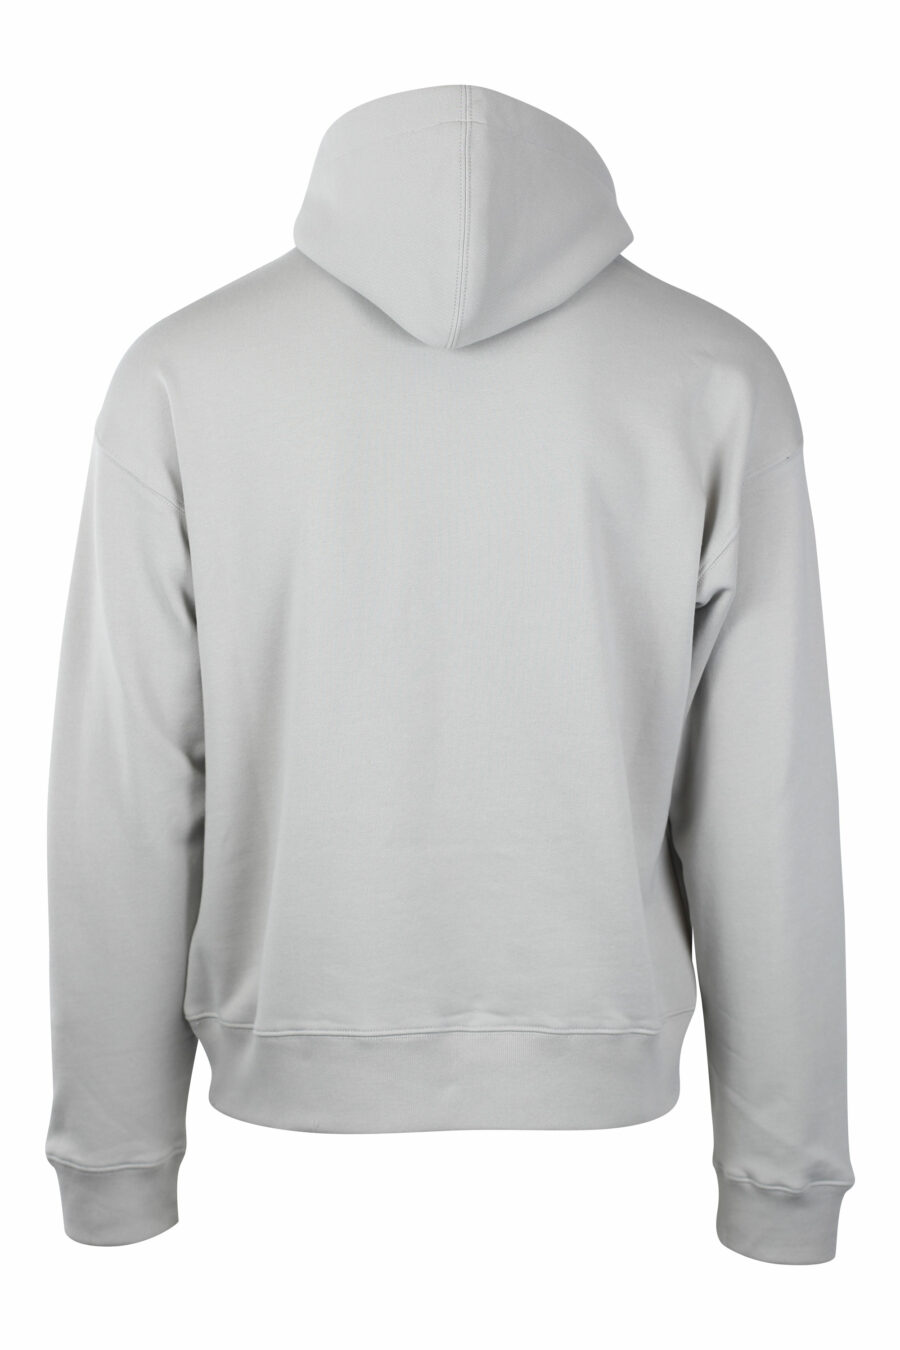 Grey hooded sweatshirt with monochrome bear mini logo - IMG 1400